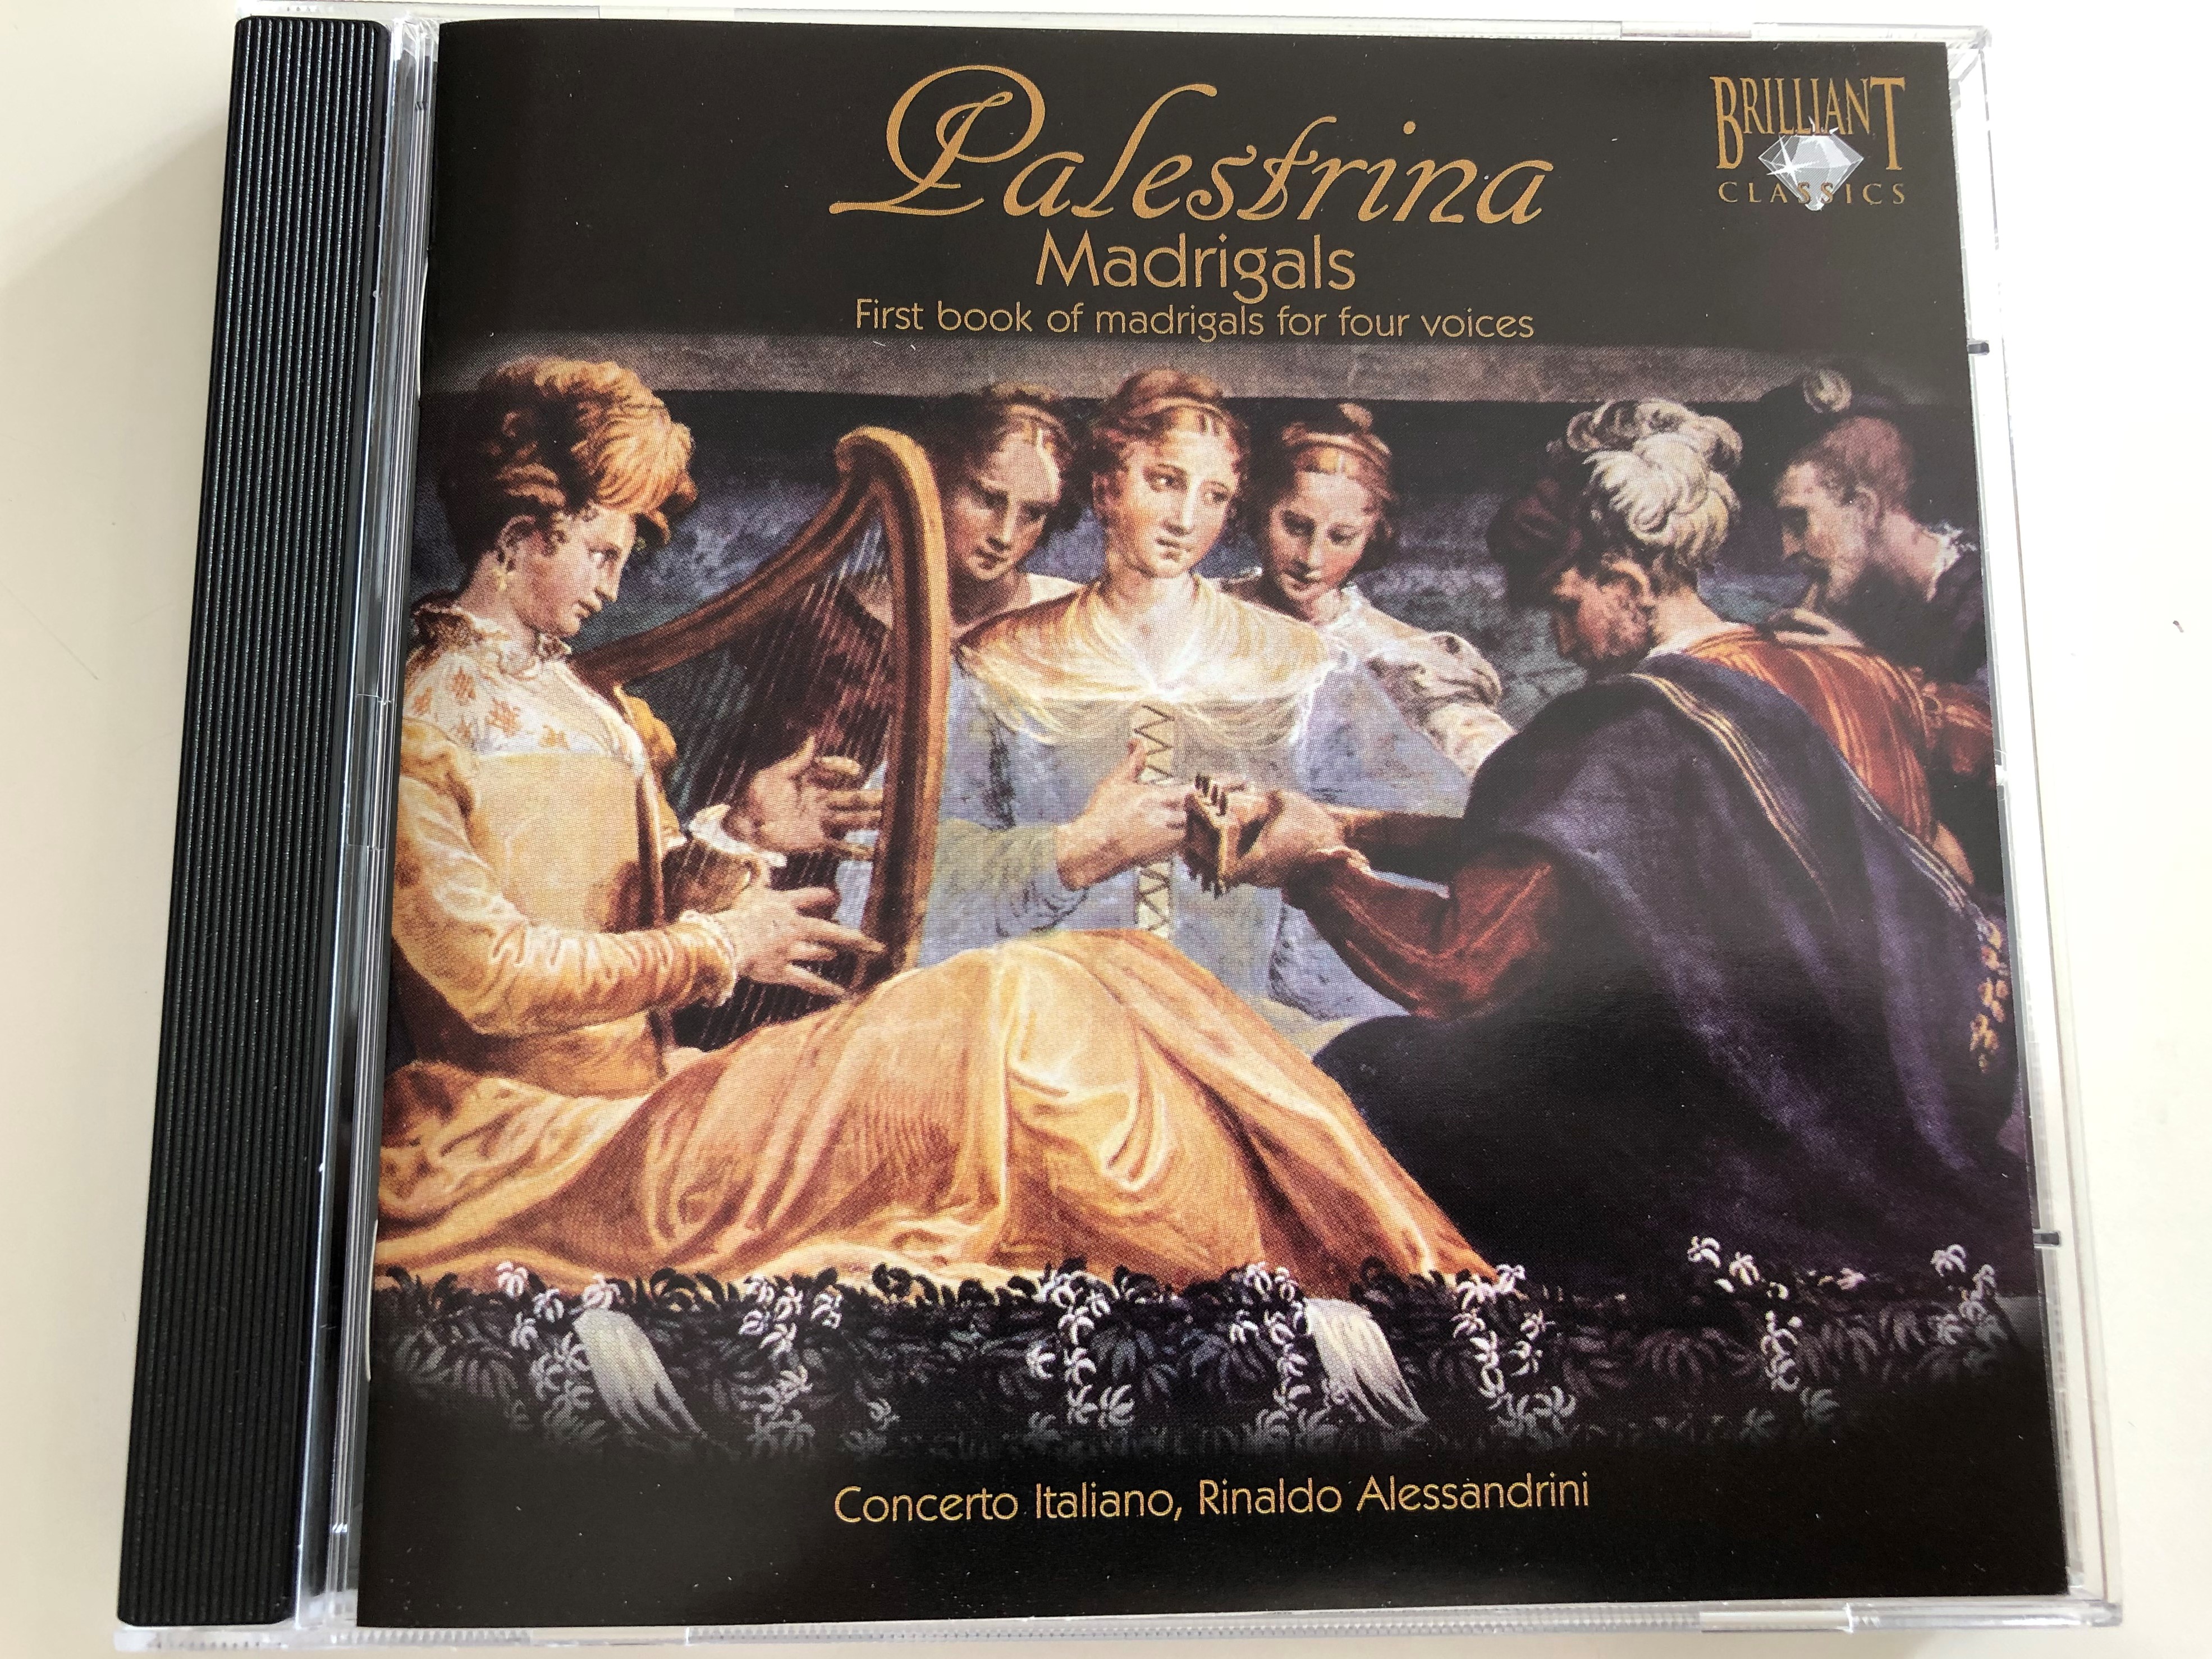 giovanni-palestrina-madrigals-first-book-of-madrigals-for-four-voices-concerto-italiano-cond.-rinaldo-alessandrini-93364-audio-cd-1994-1-.jpg